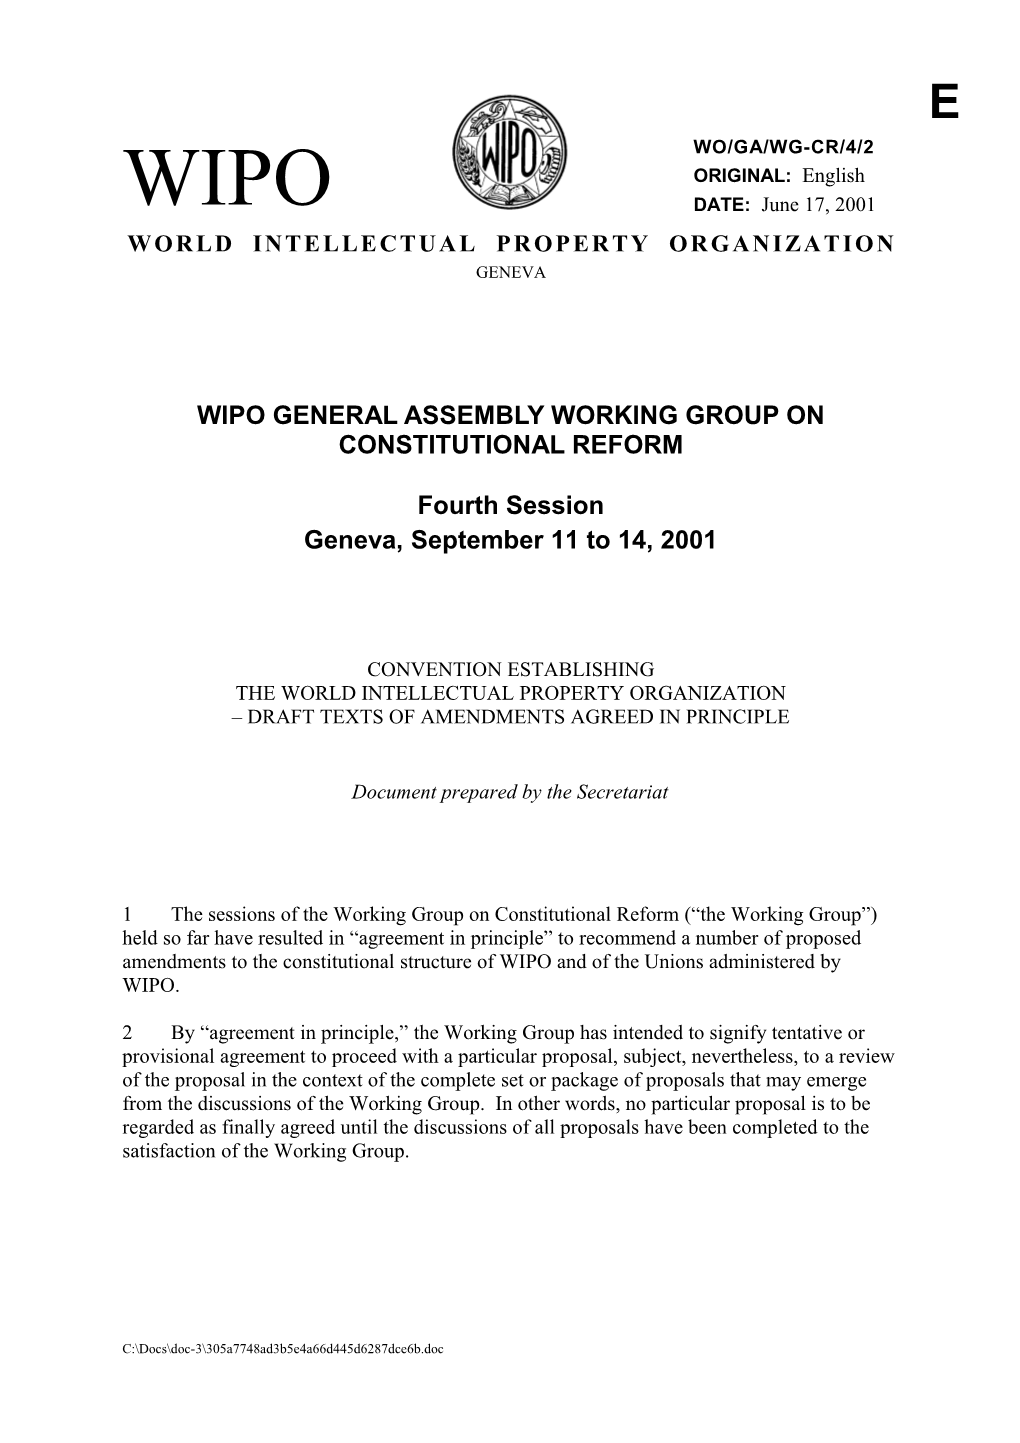 WO/GA/WG-CR/4/2: Convention Establishing the World Intellectual Property Organization